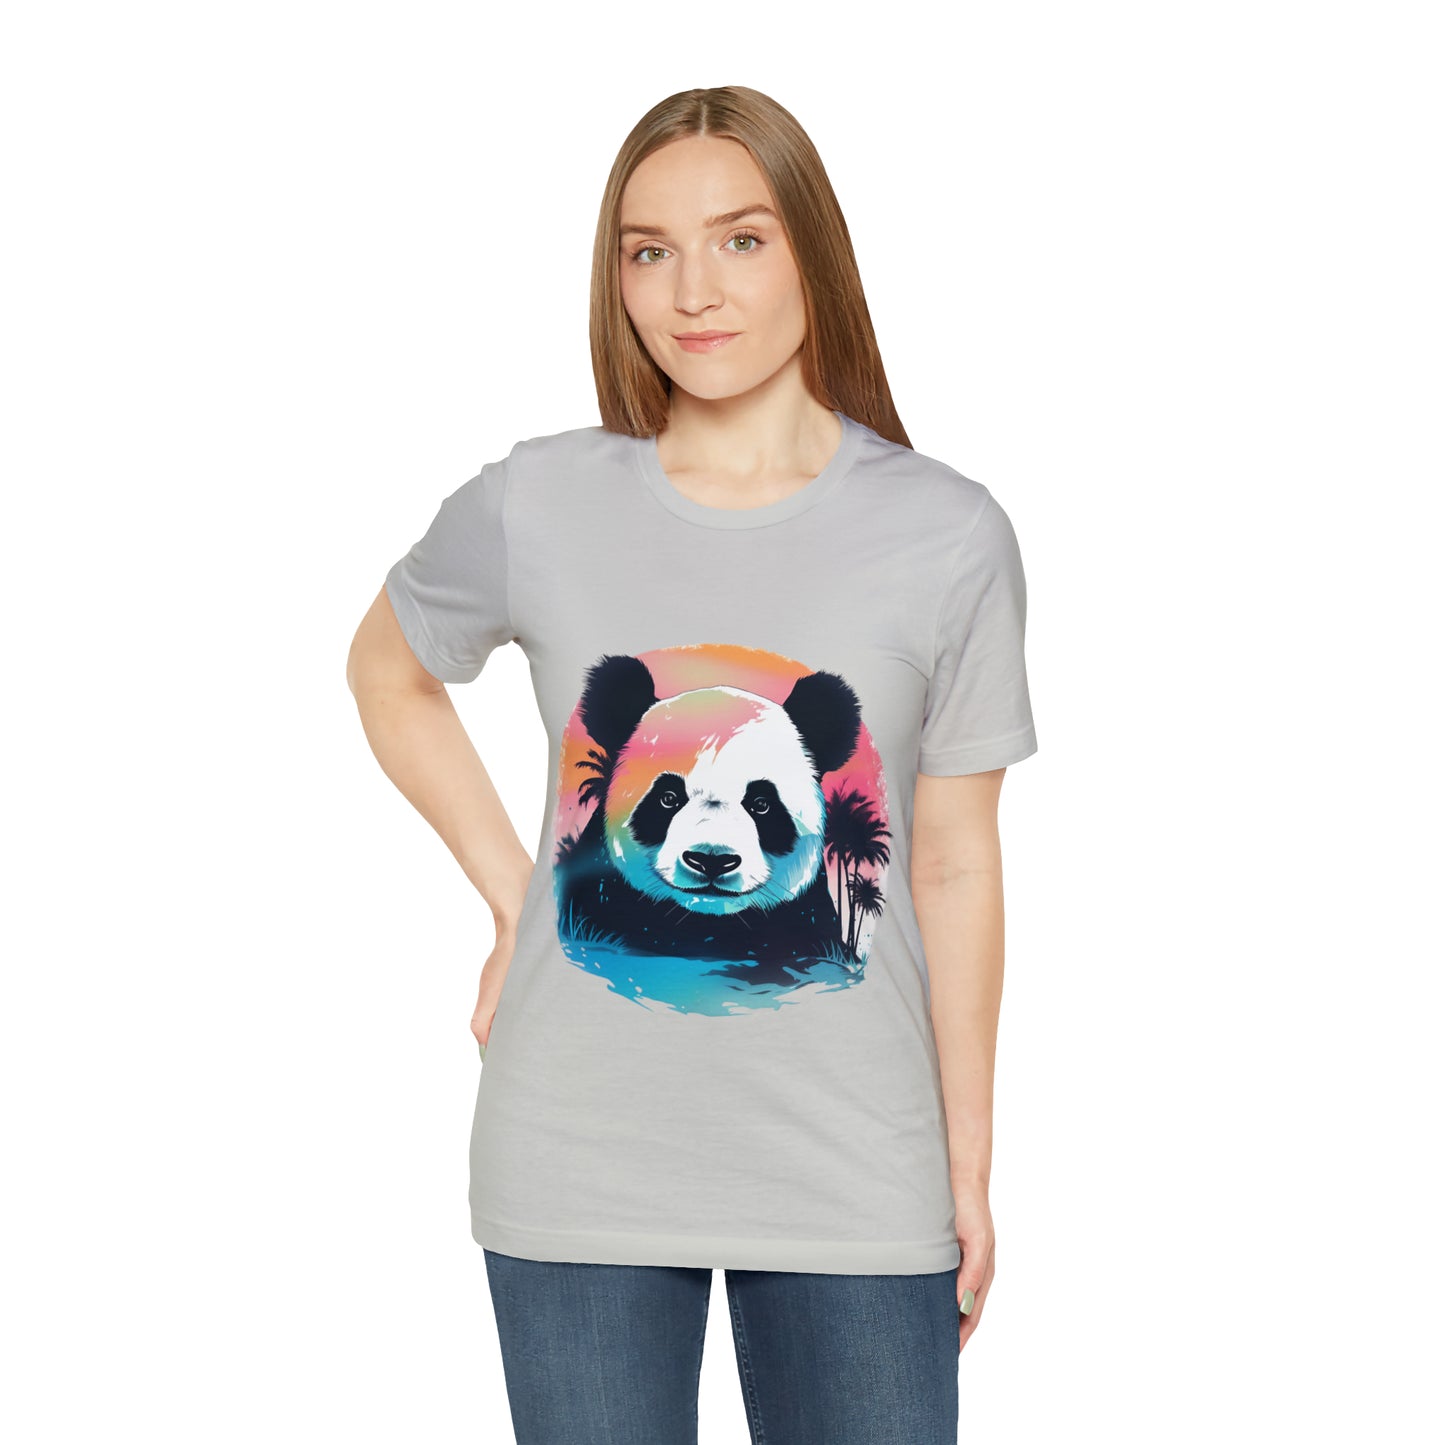 Panda Power Tee